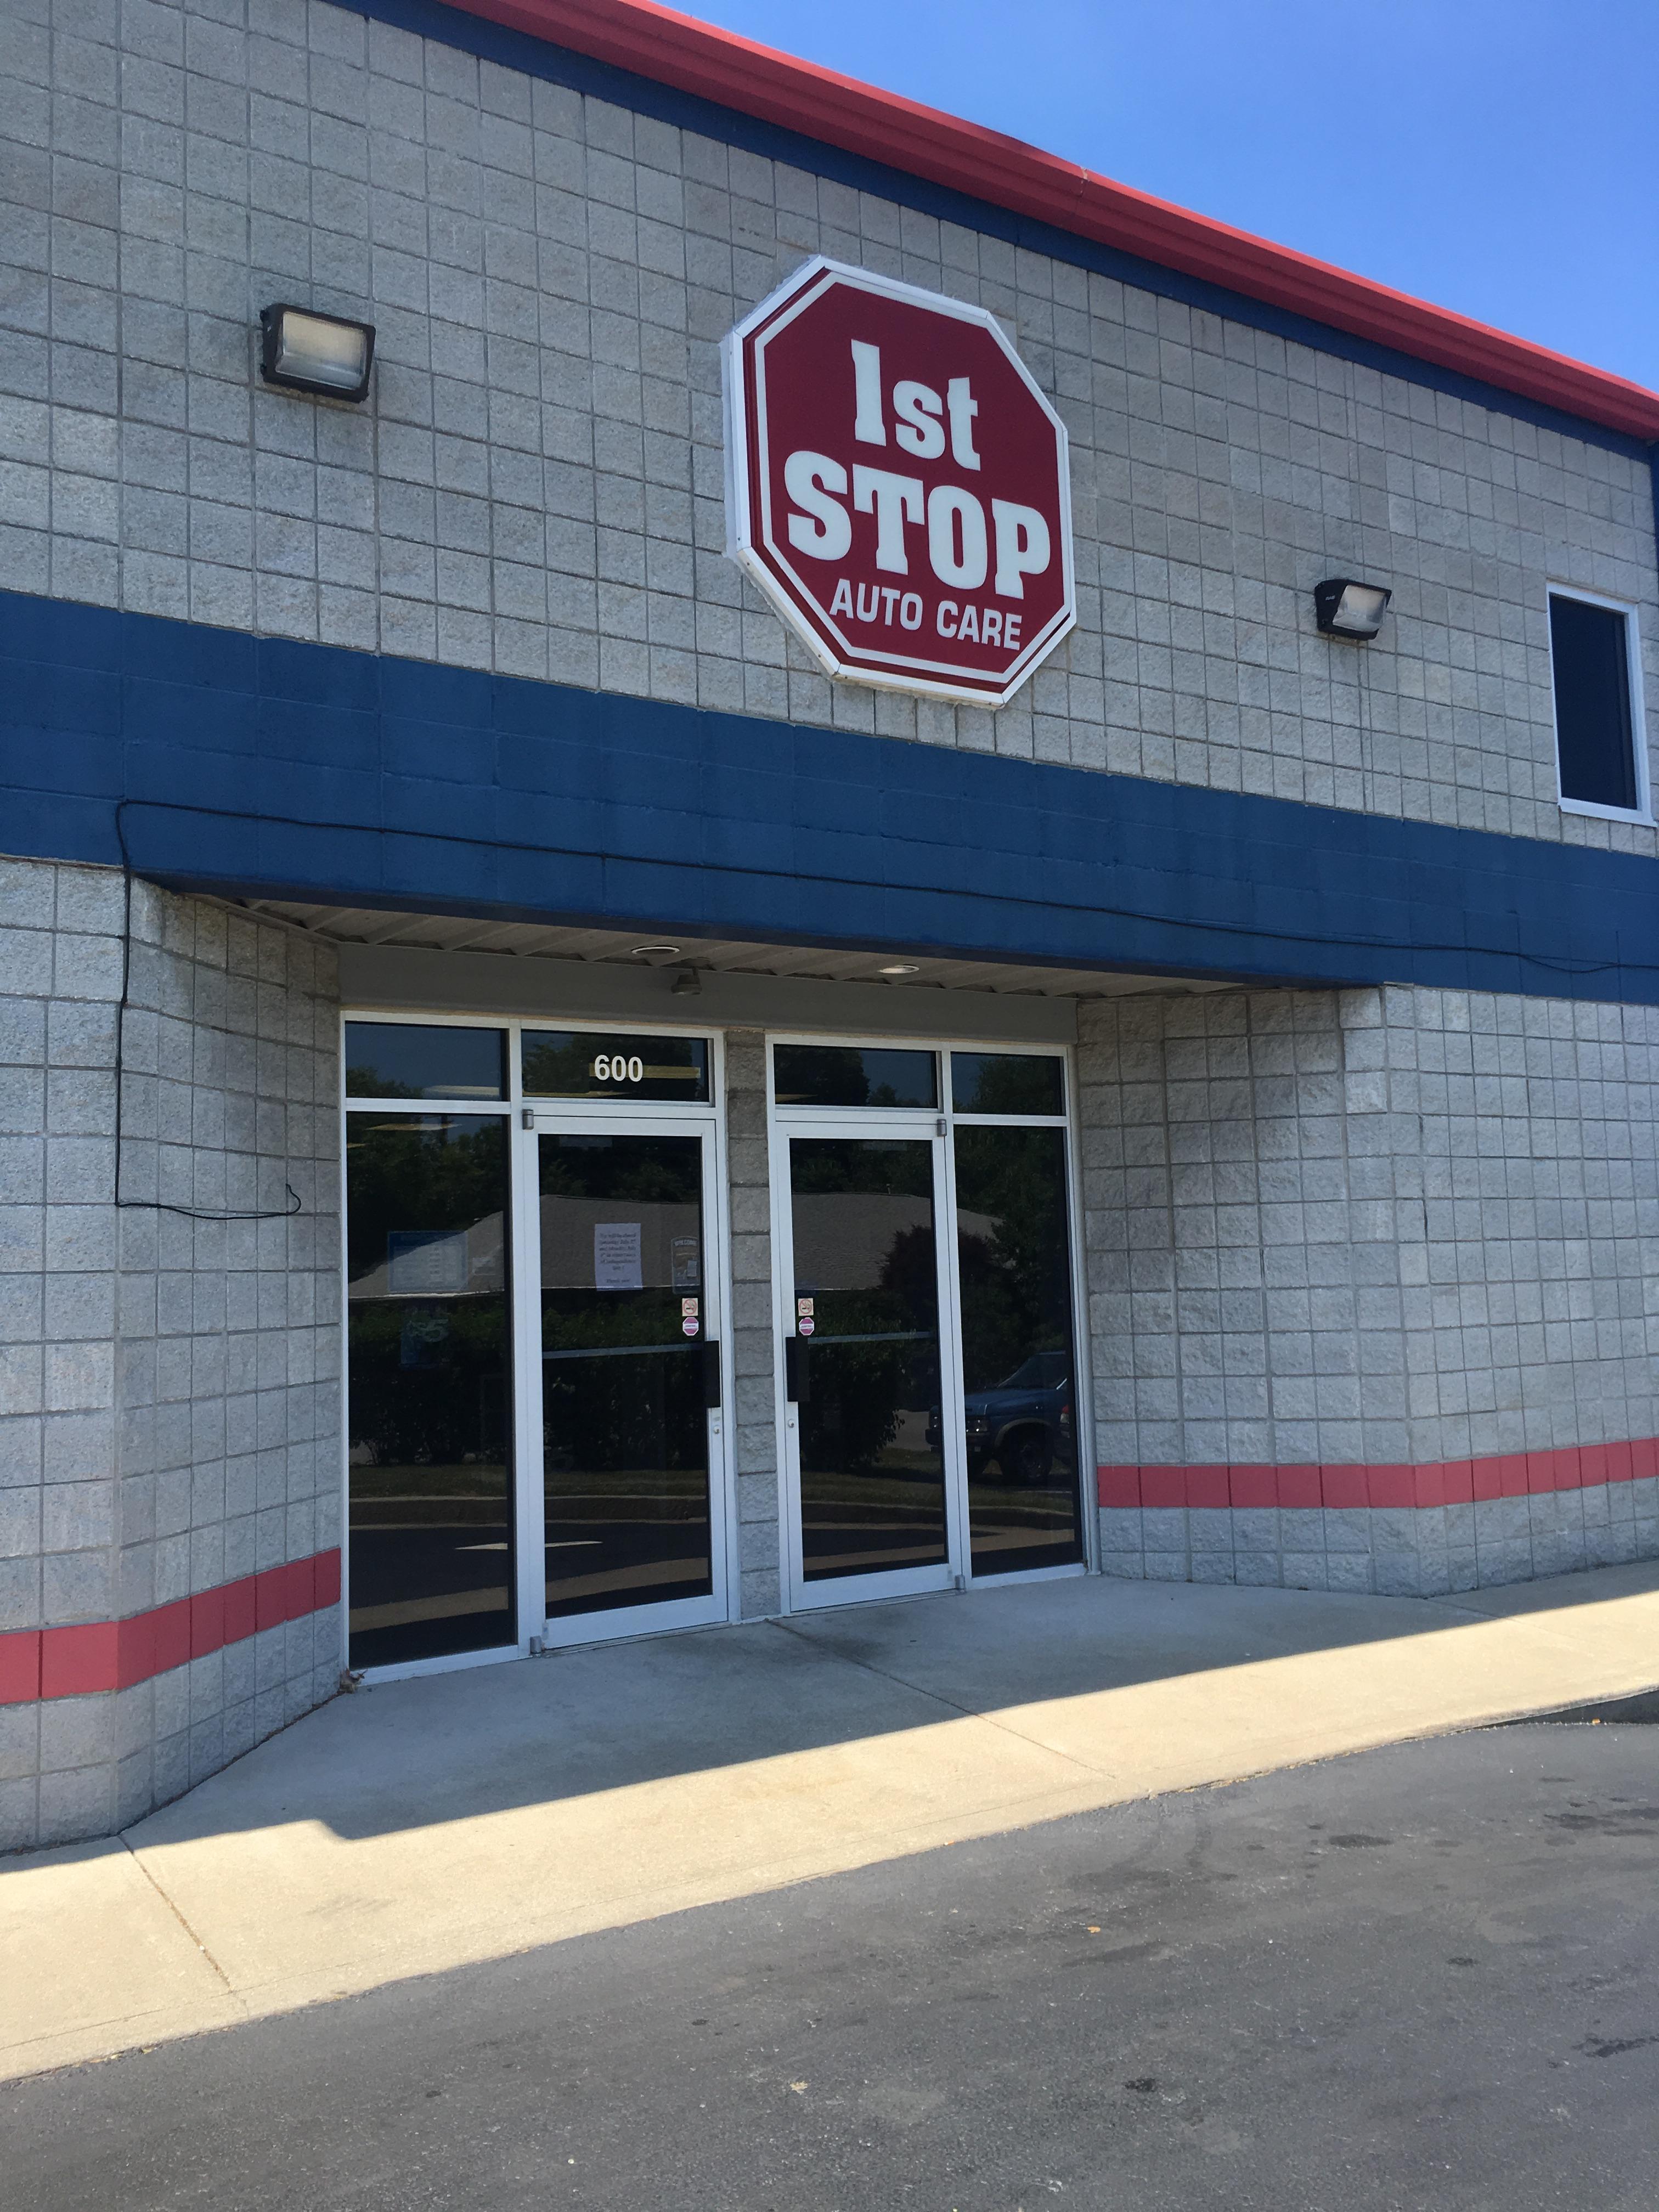 1st Stop Auto Care Centers Inc Photo